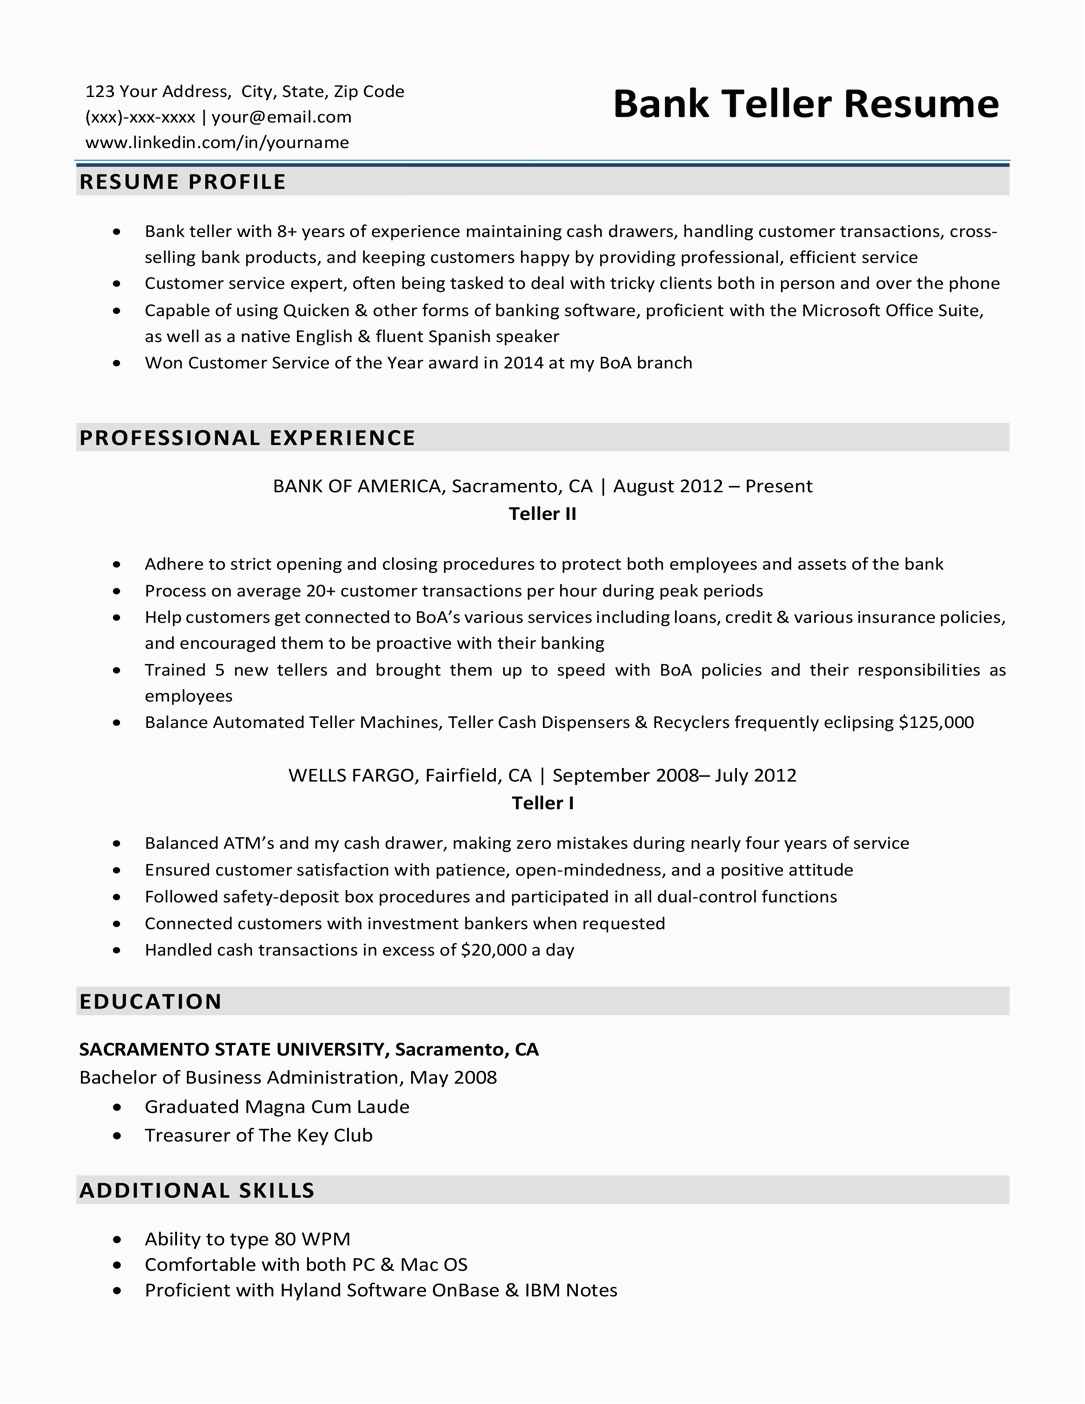 Sample Resume Objectives for Bank Teller Bank Teller Resume Sample Finder Jobs